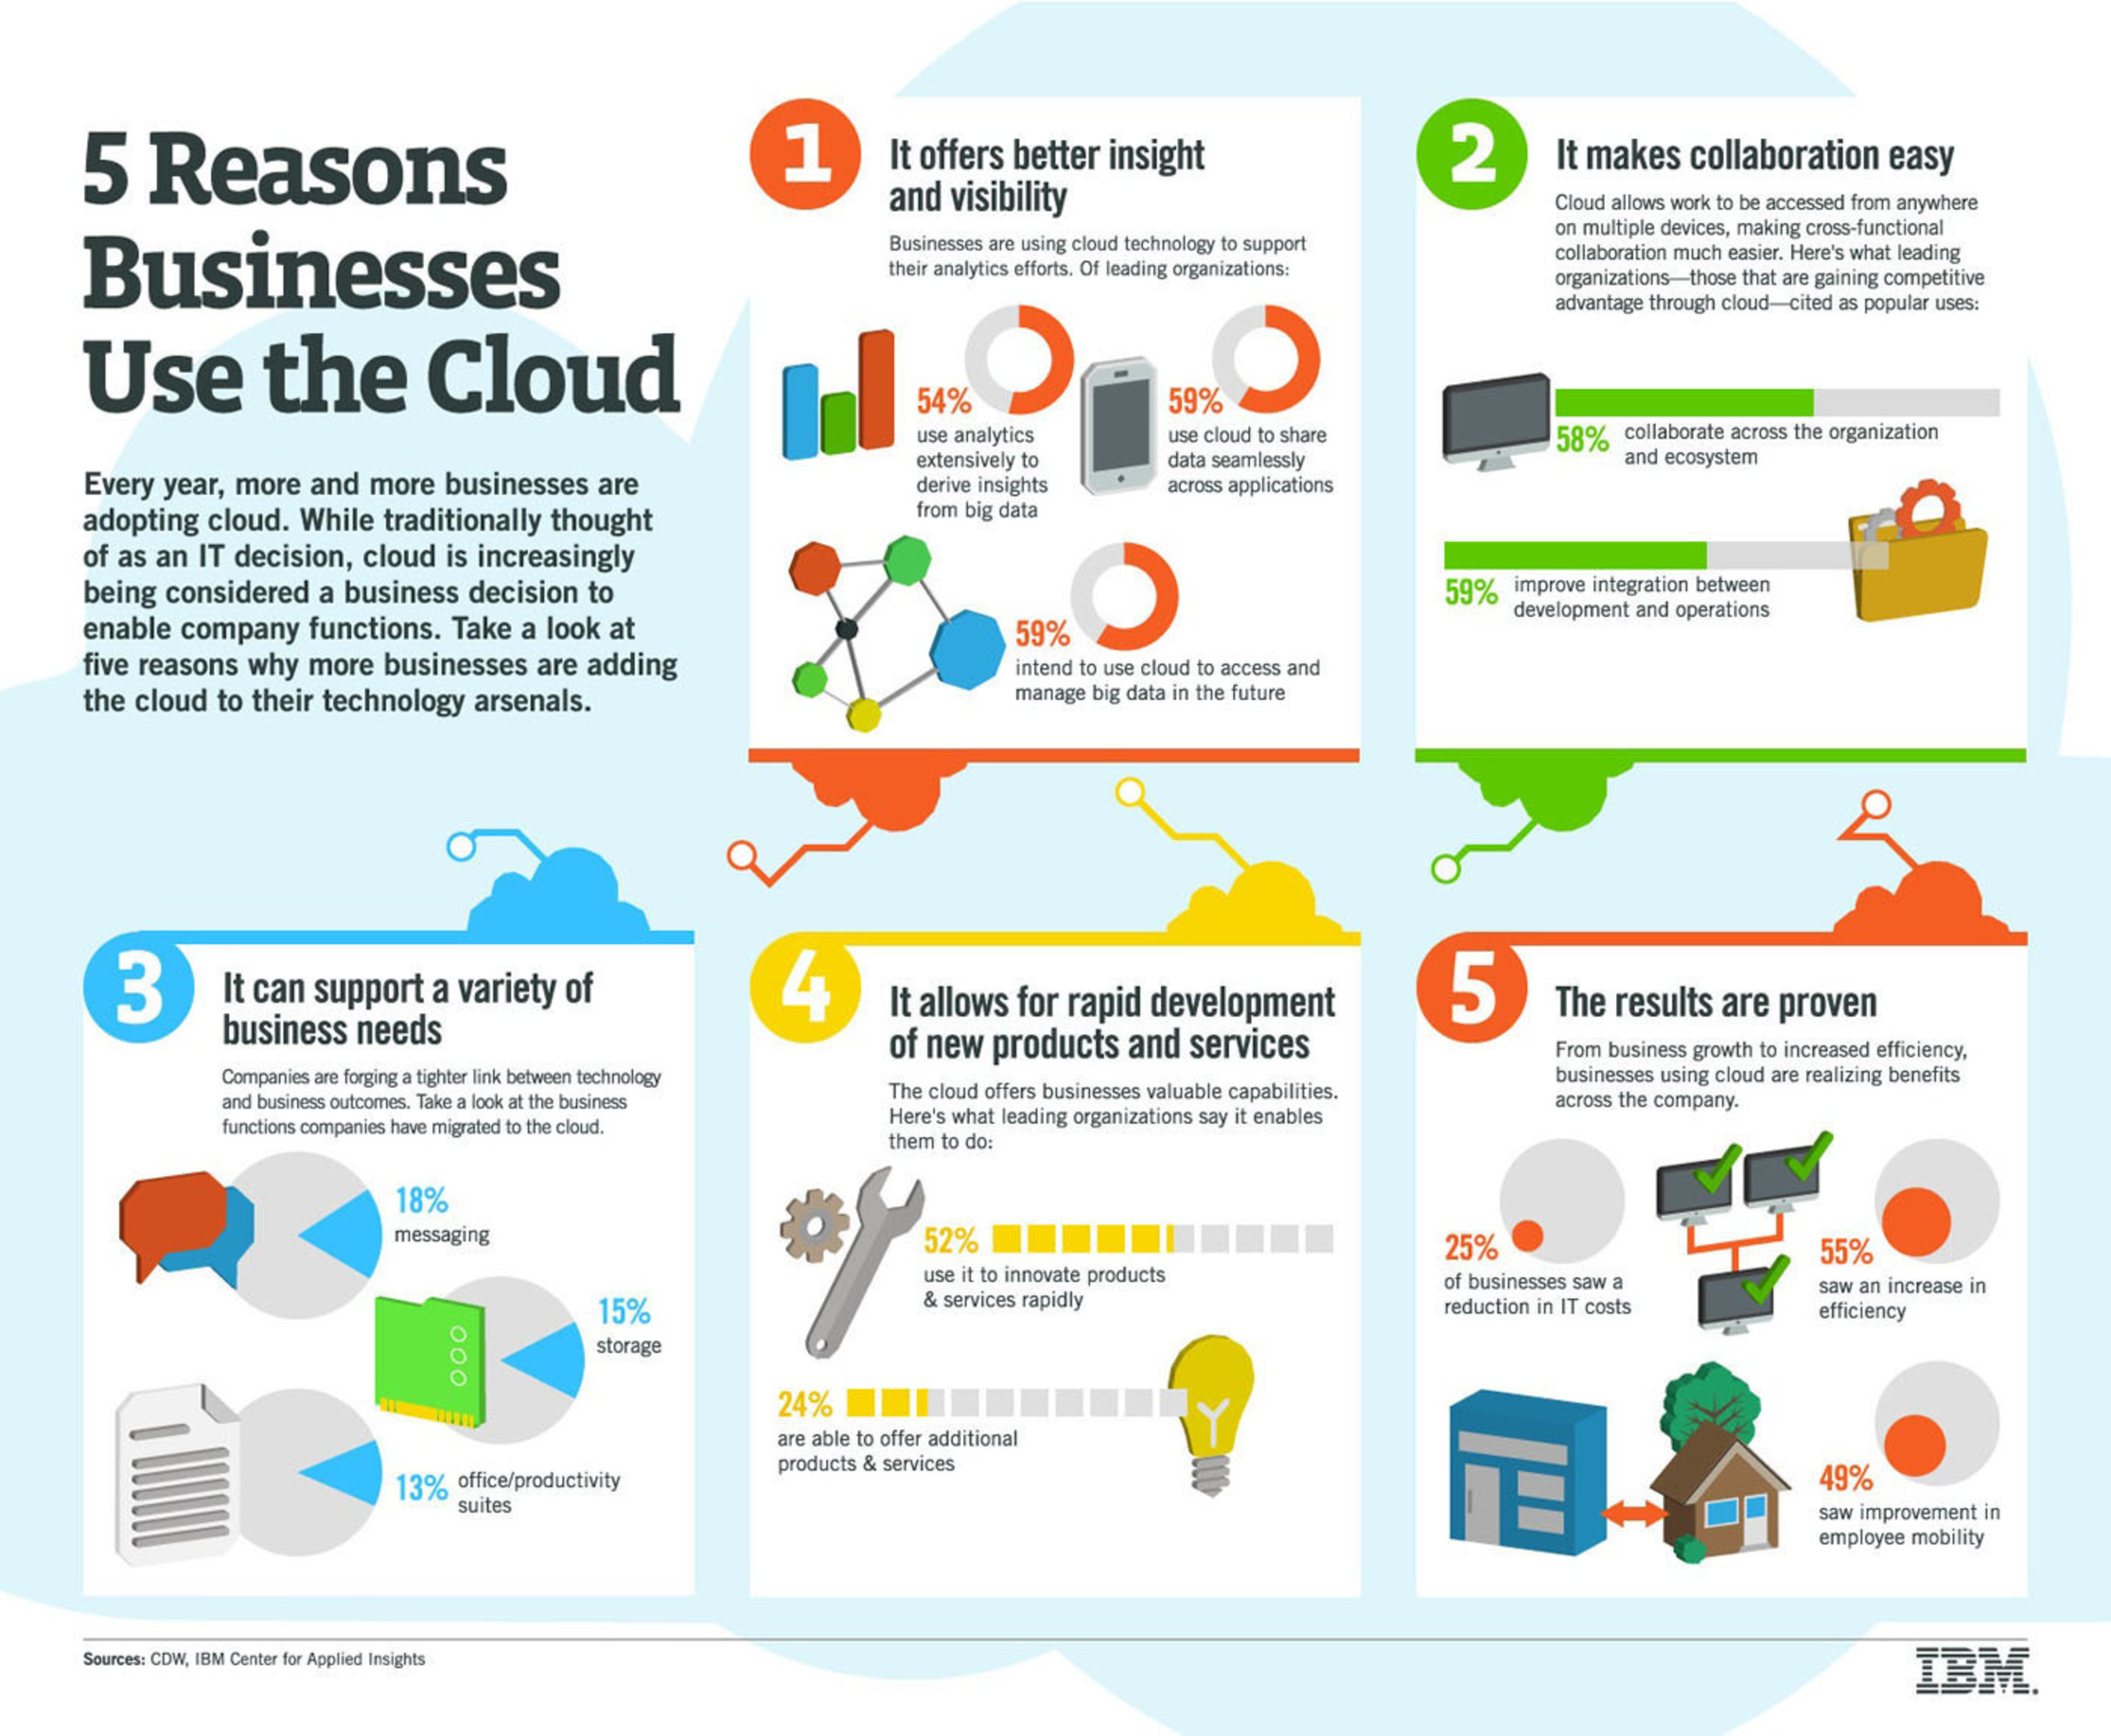 Five Reasons Businesses Use Cloud. (PRNewsFoto/IBM) (PRNewsFoto/IBM)